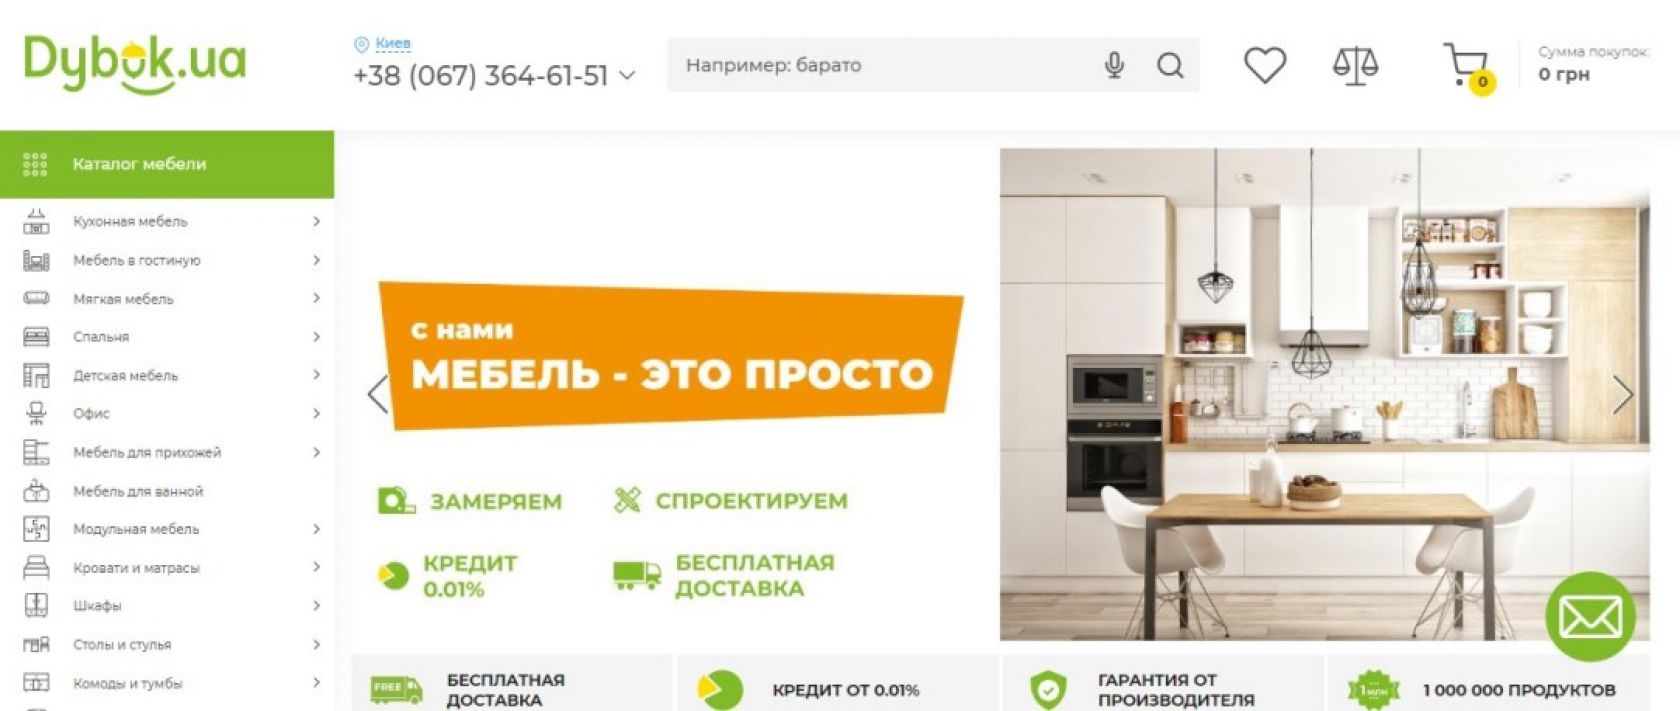 Кейс PPC рекламы для Dybok.ua